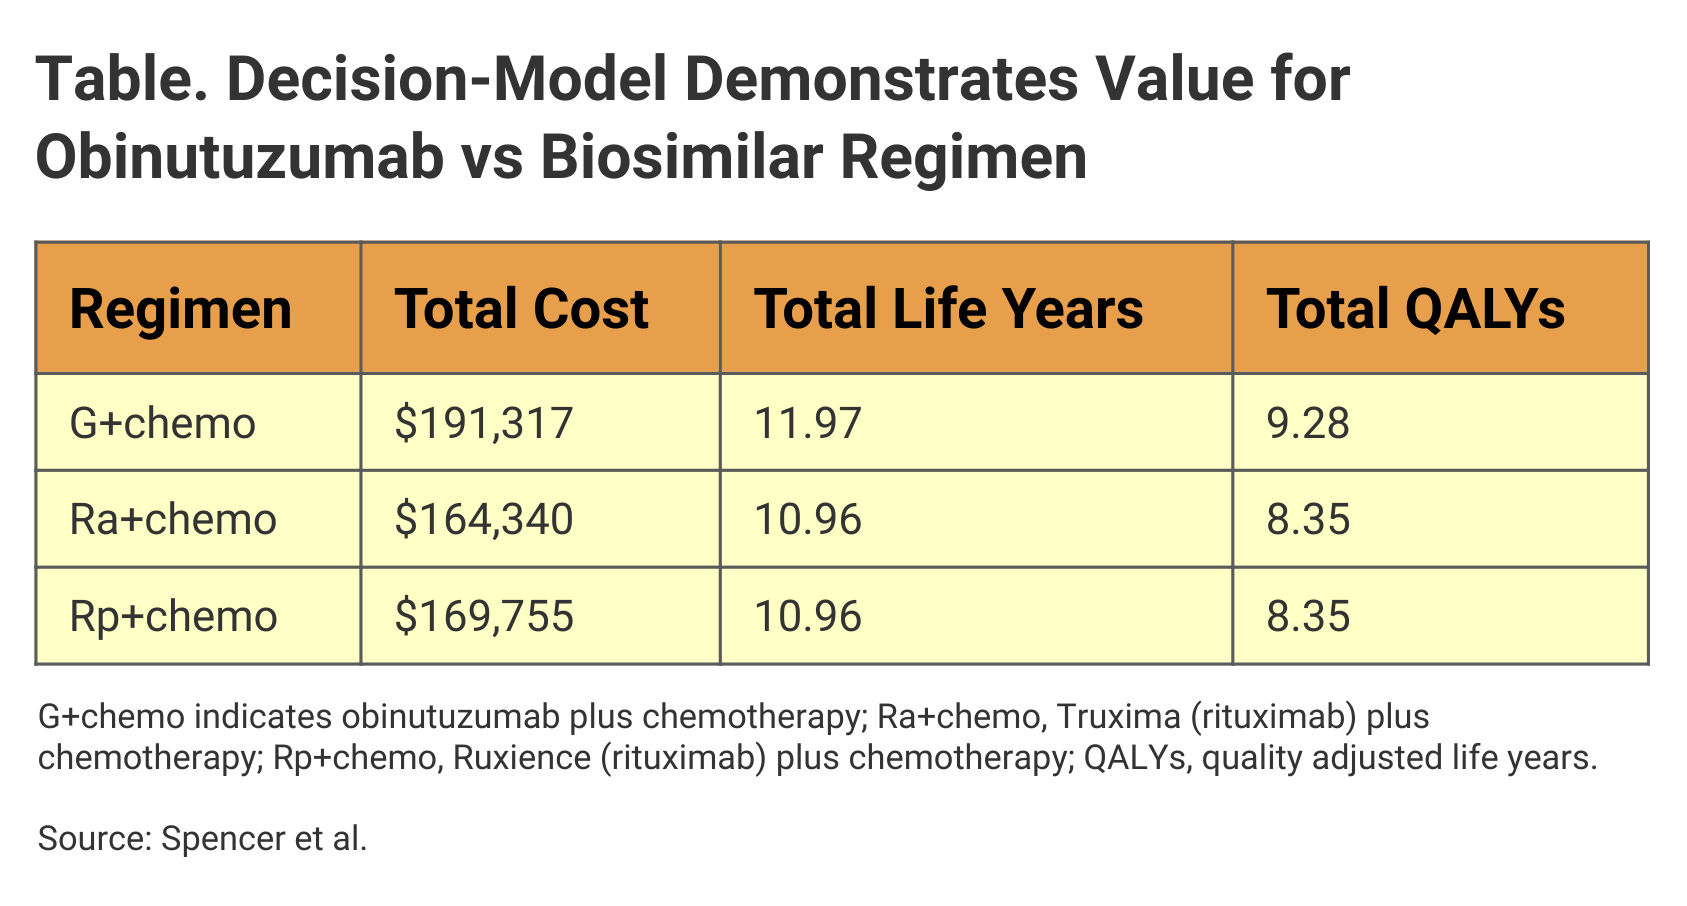 Table. Decision-Model Demonstrates Value for Obinutuzumab vs Biosimilar Regimen